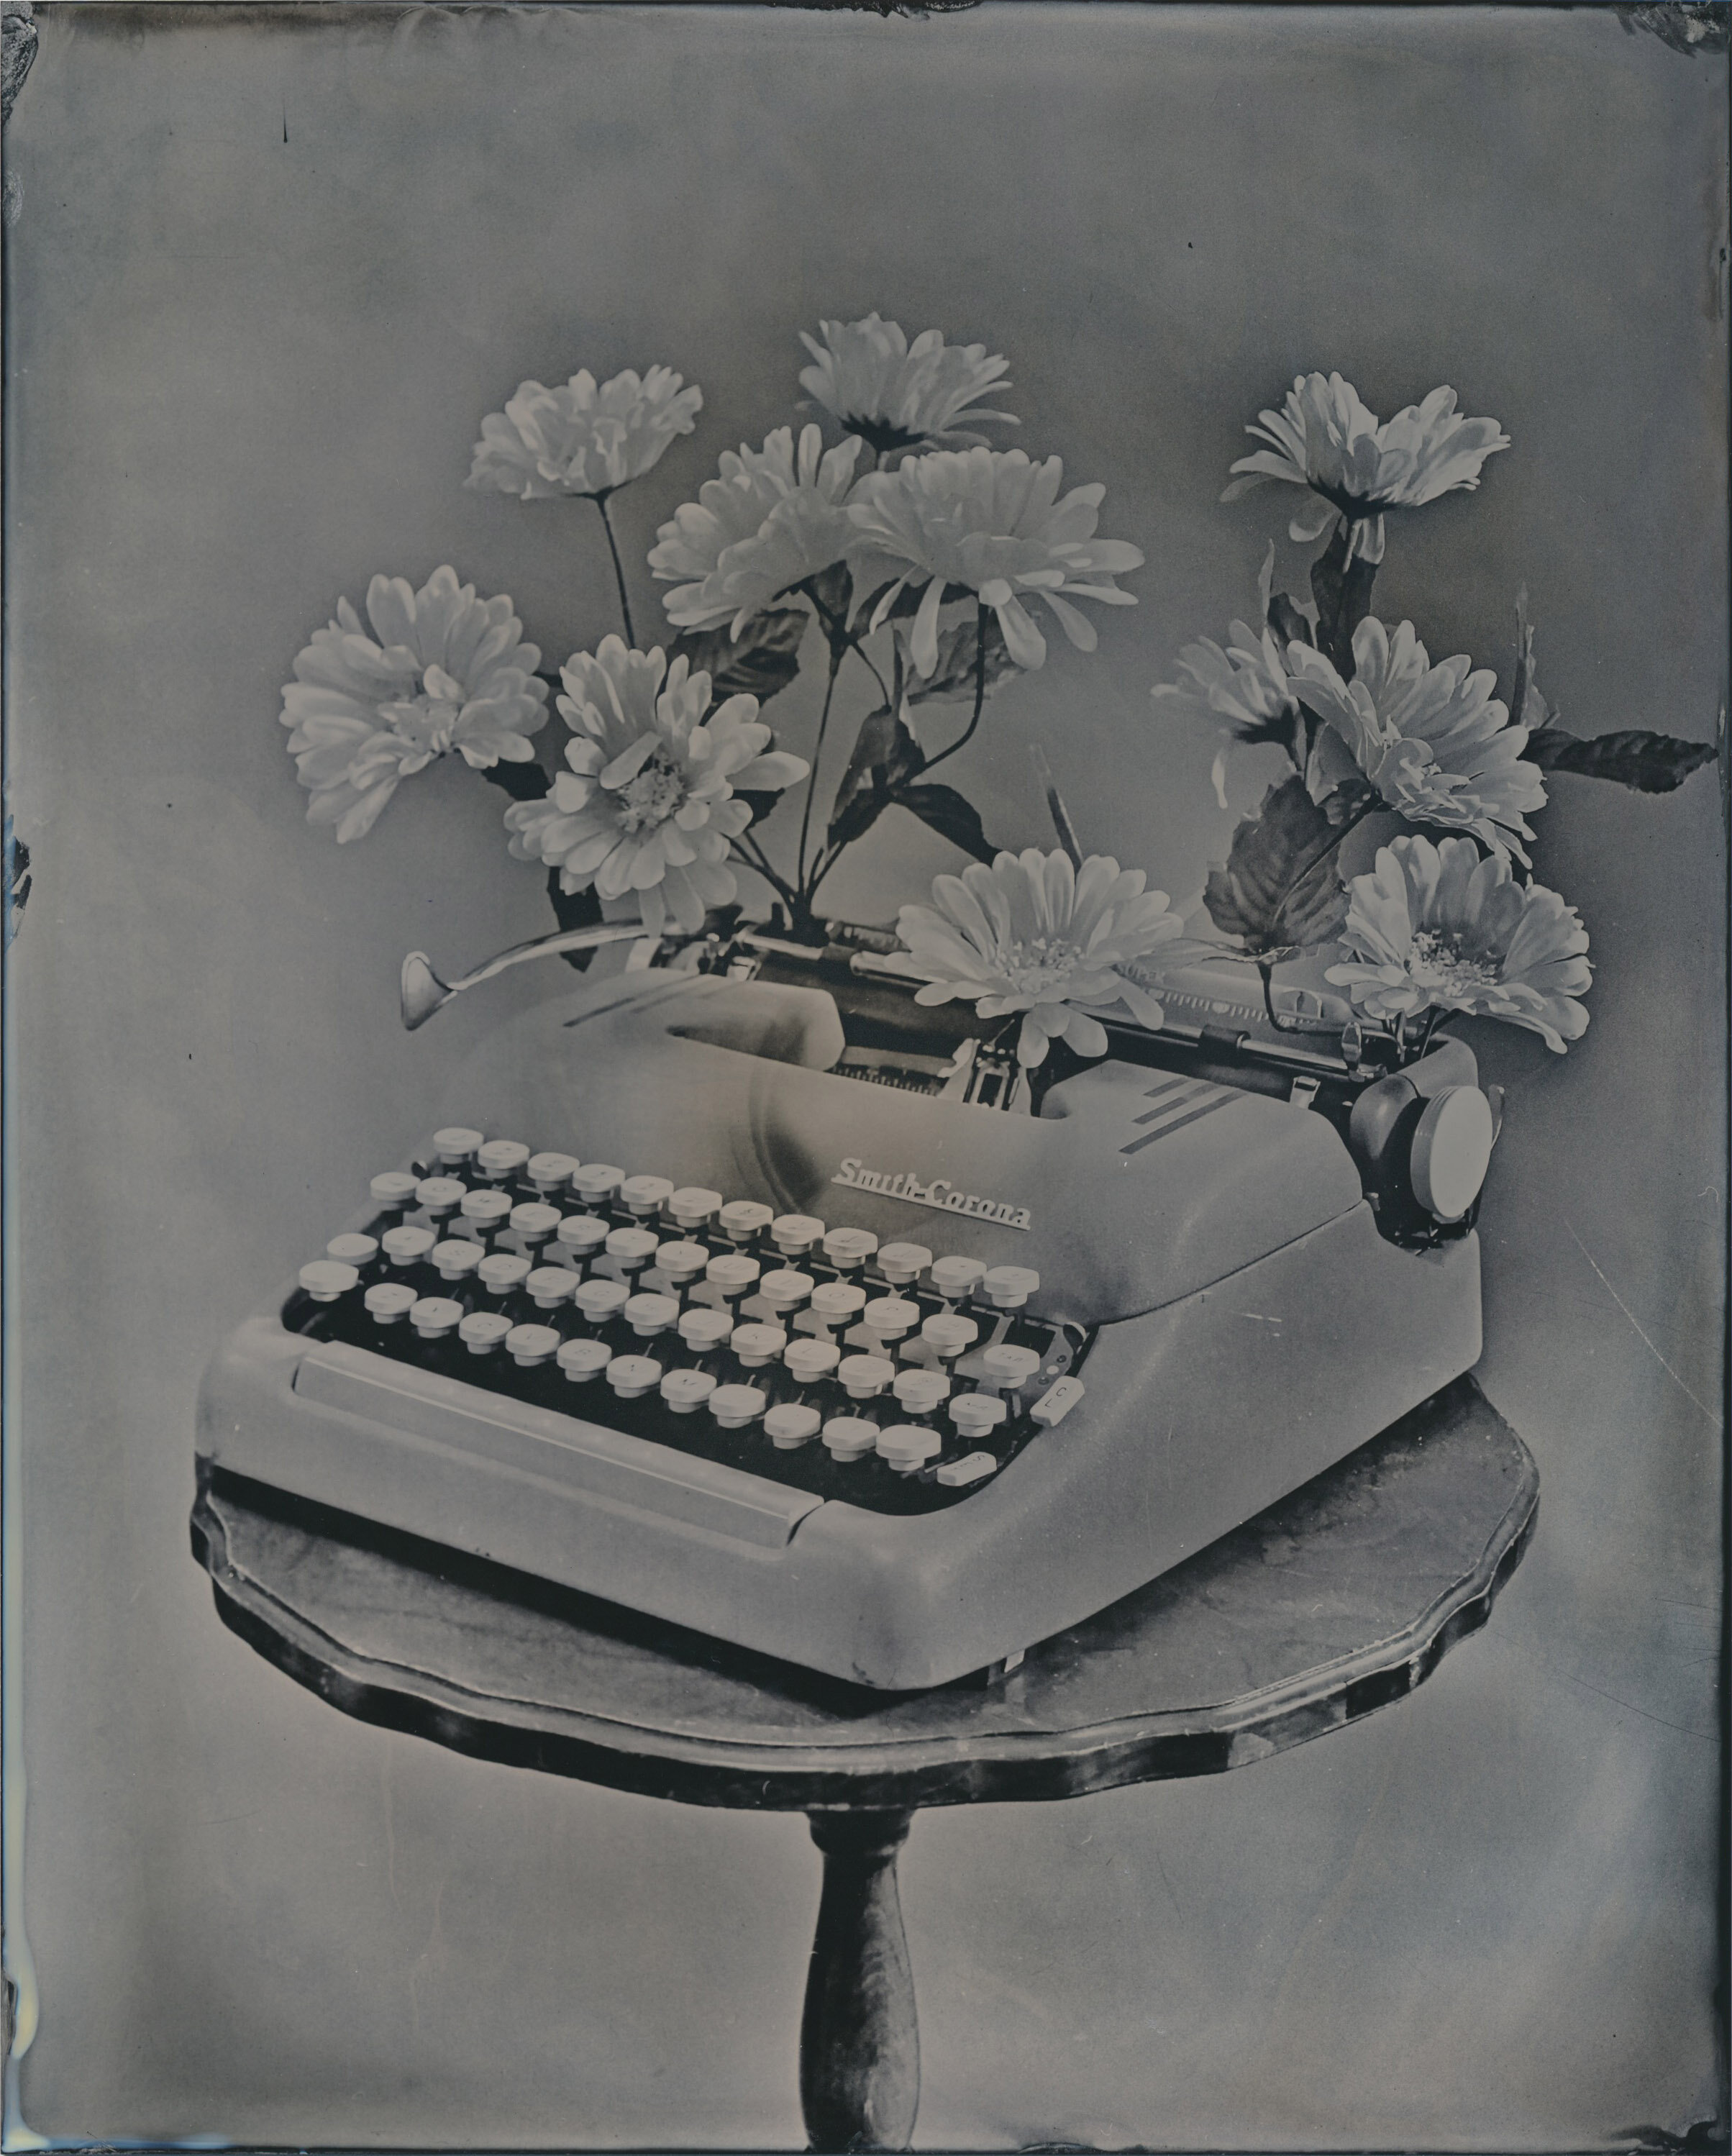   “Typewriter Study #1”   2020  Wet Plate Collodion  8x10 